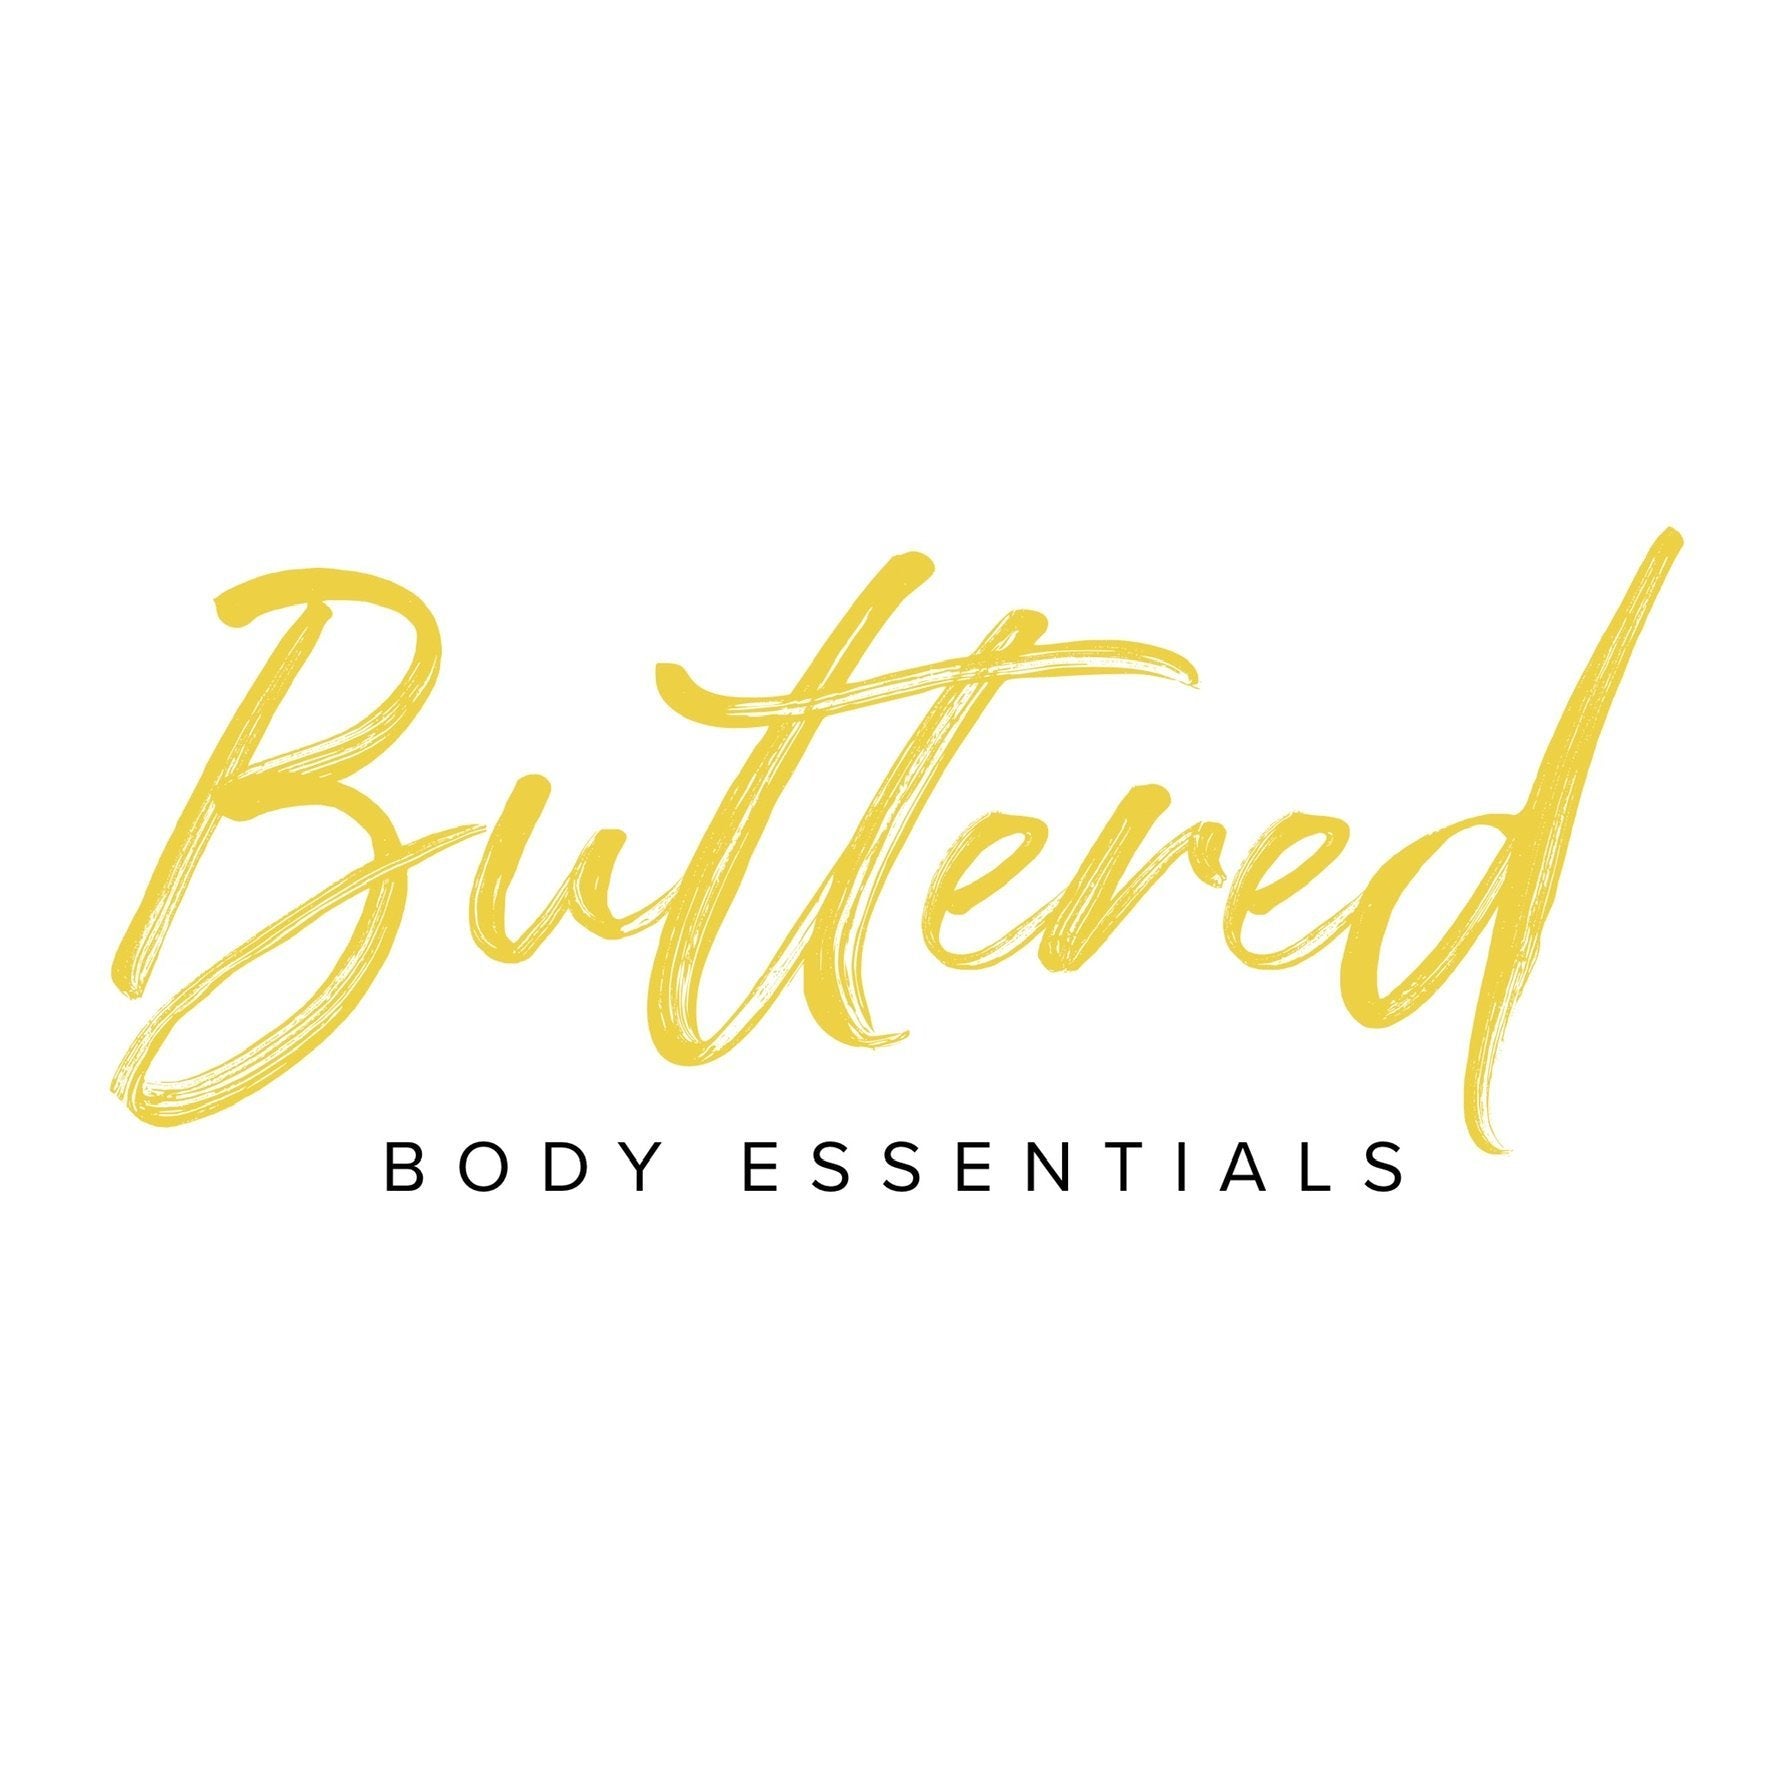 Buttered Body Essentials 